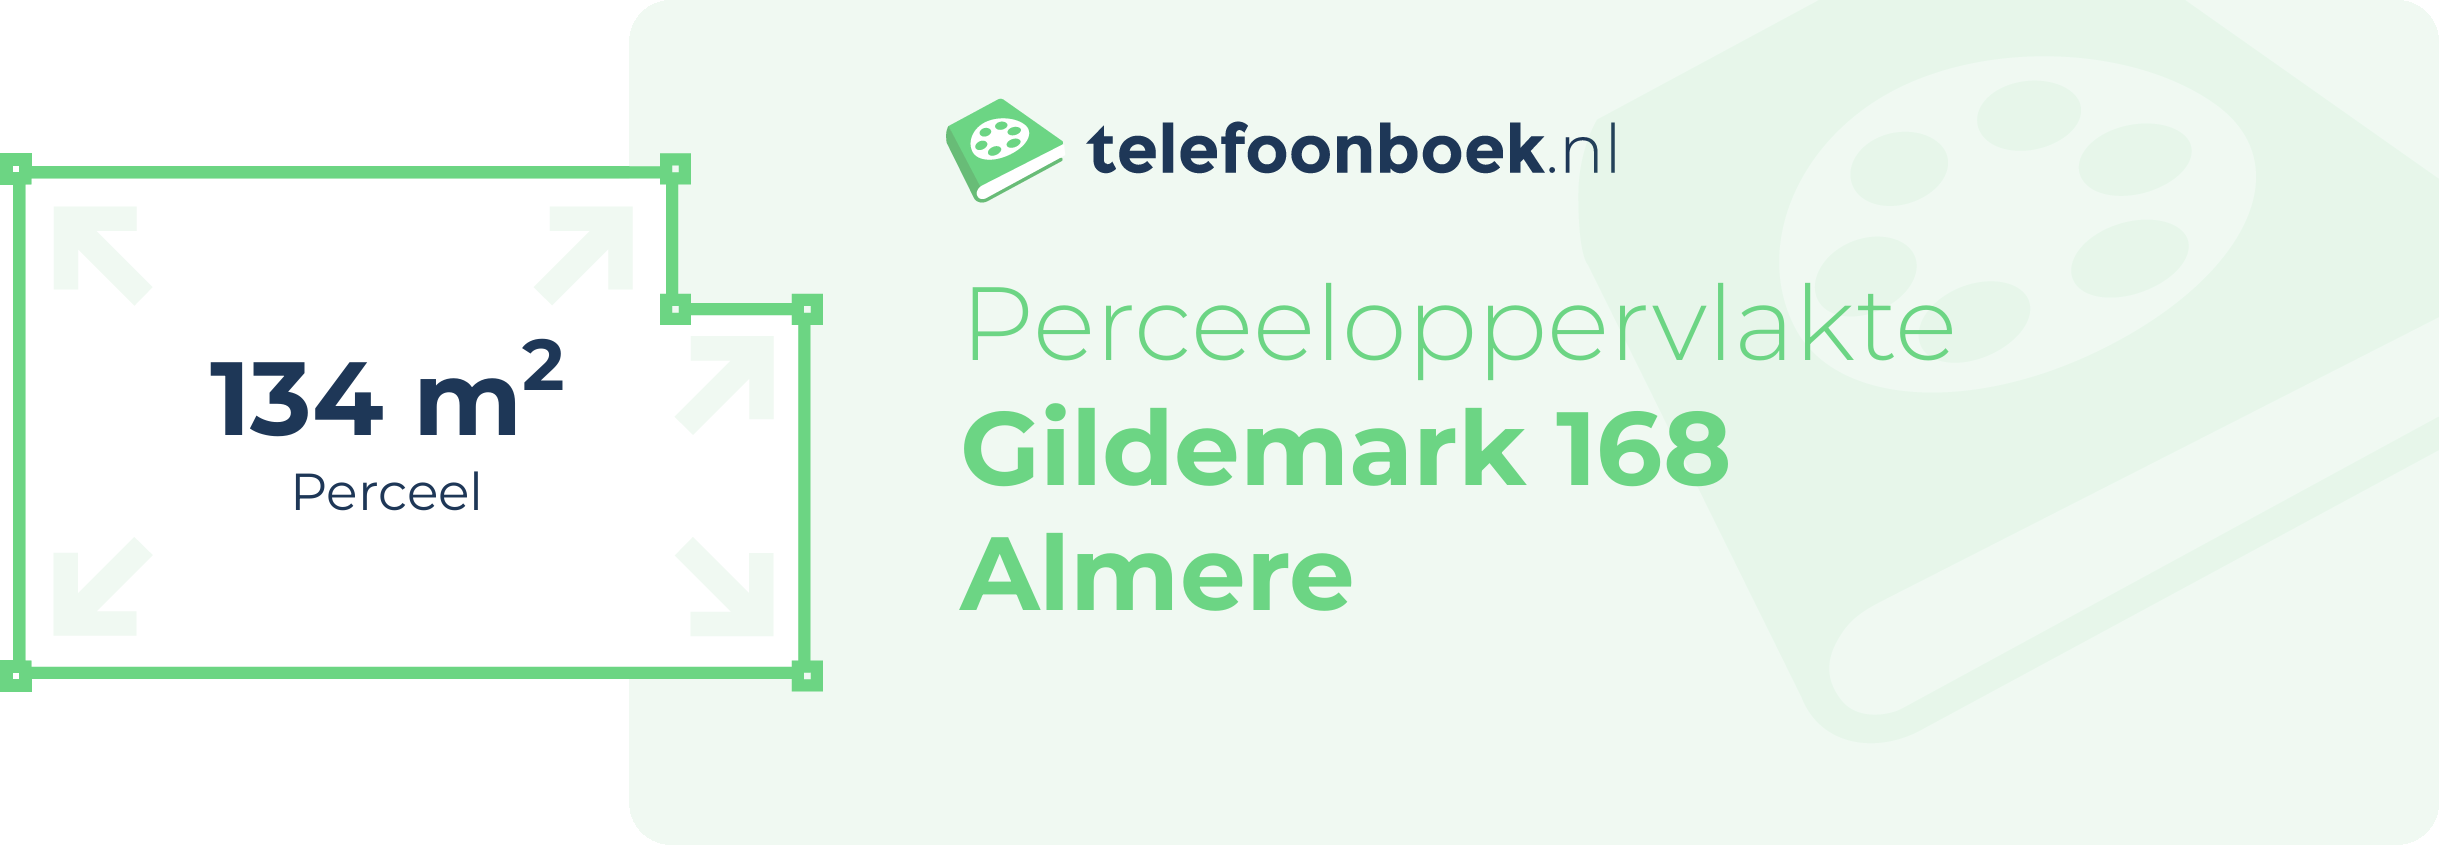 Perceeloppervlakte Gildemark 168 Almere